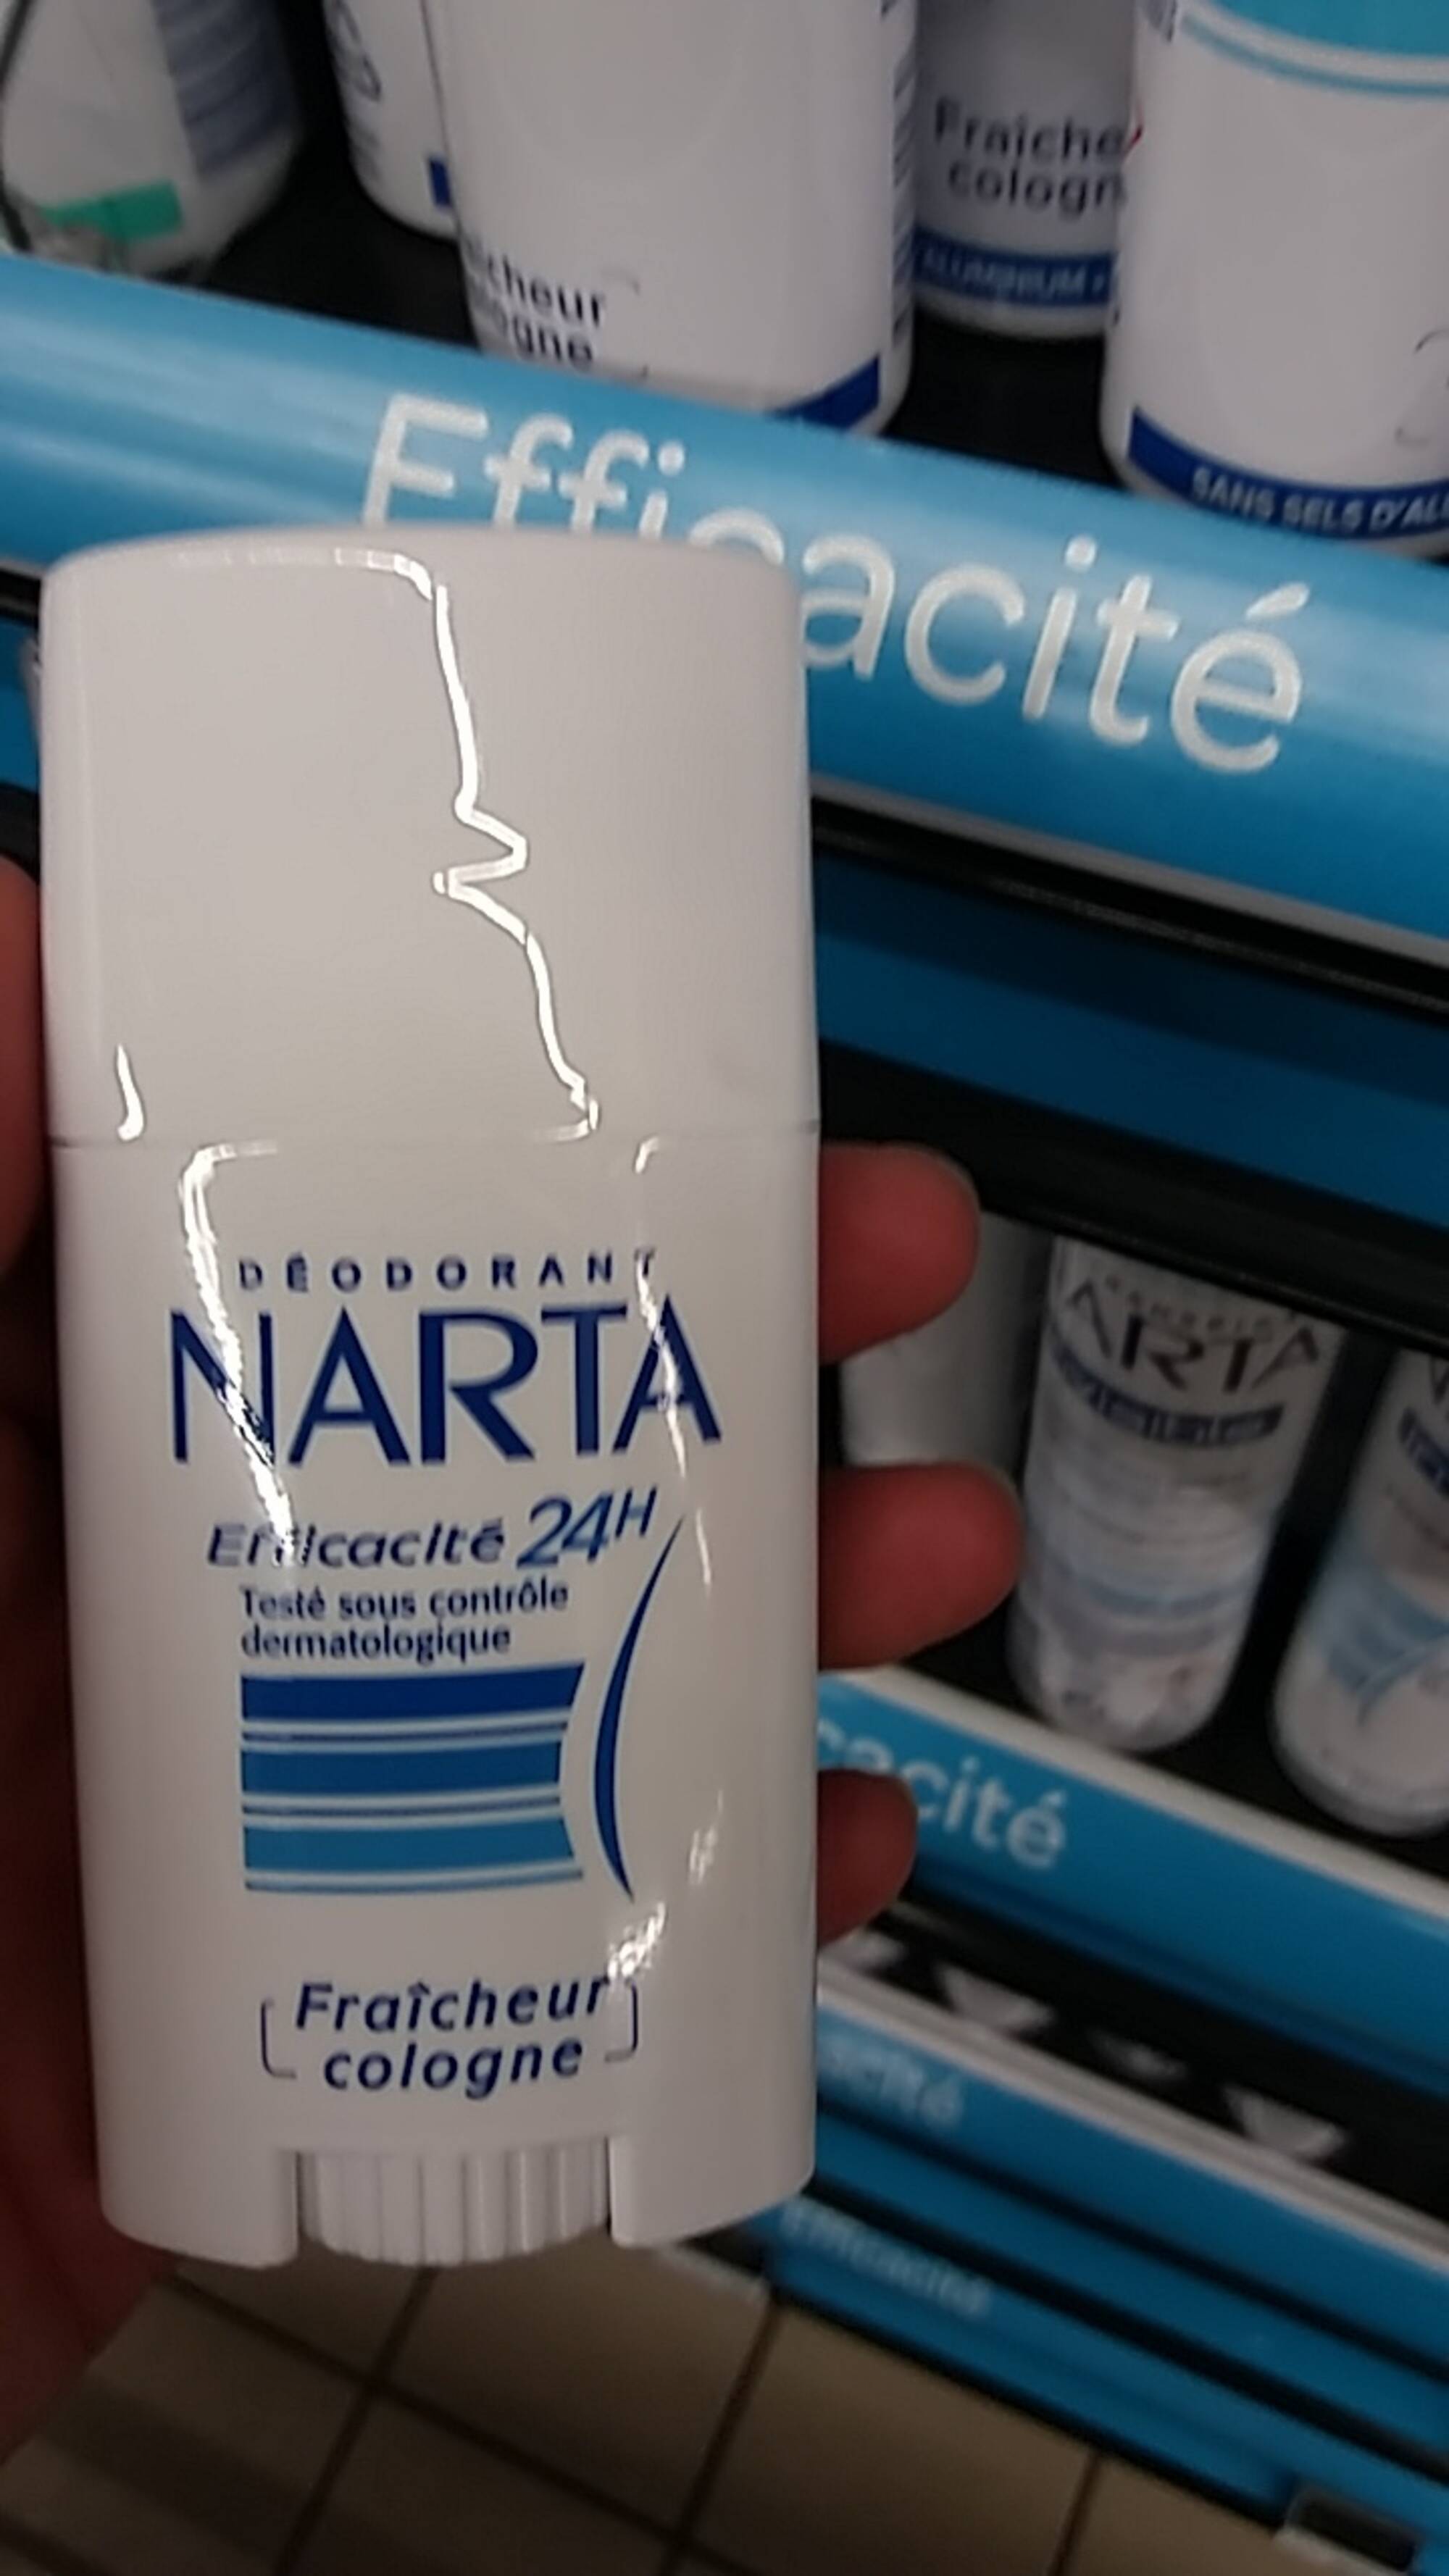 NARTA - Déodorant efficacité 24h